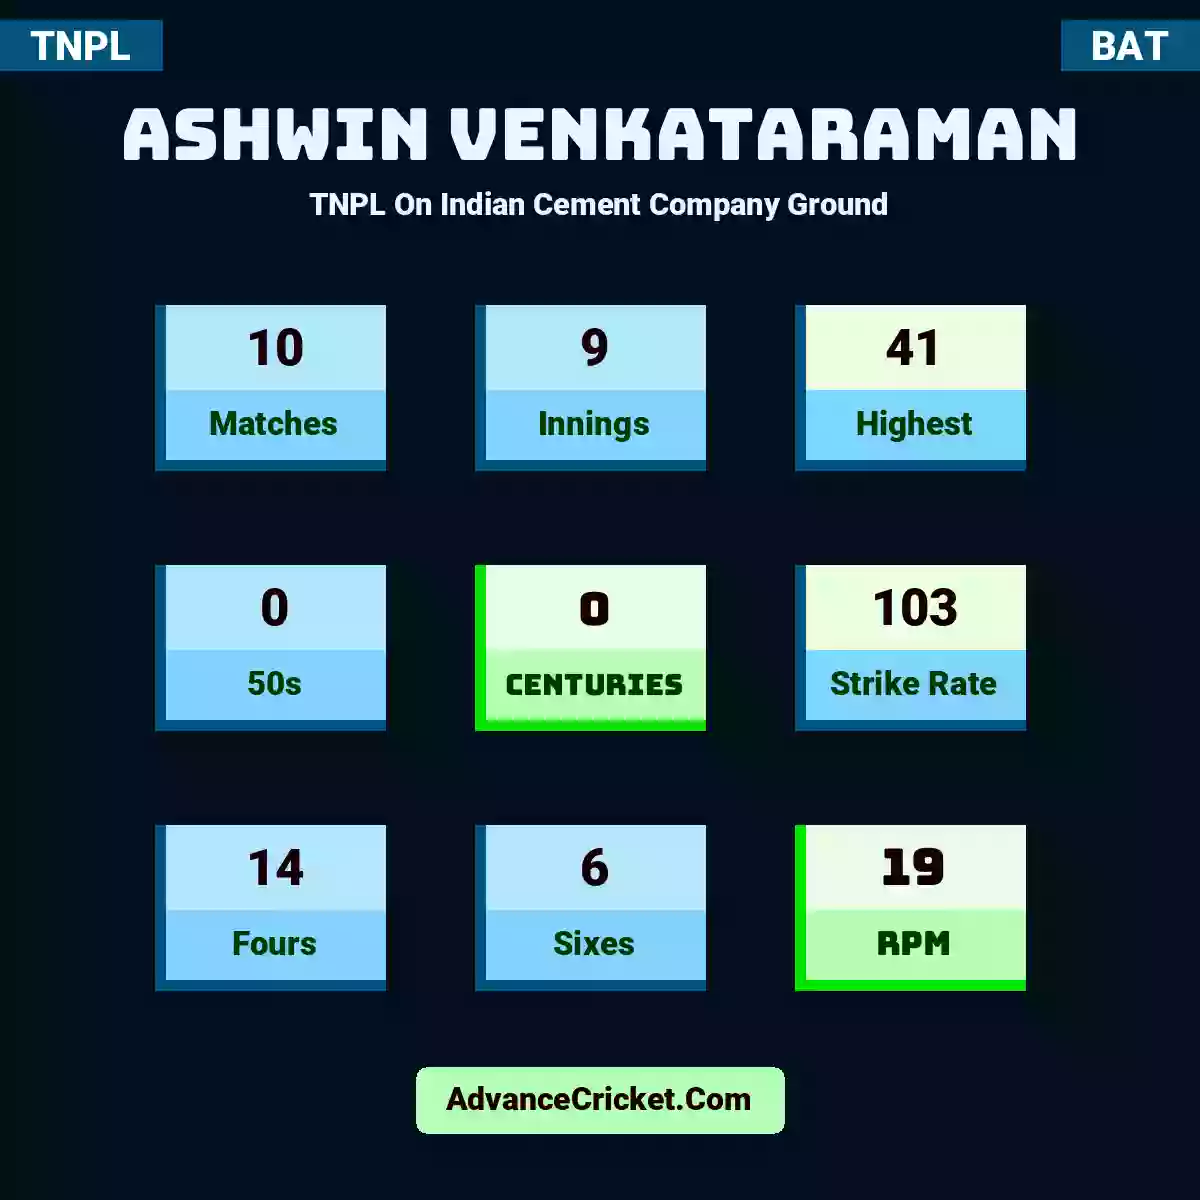 Ashwin Venkataraman TNPL  On Indian Cement Company Ground, Ashwin Venkataraman played 10 matches, scored 41 runs as highest, 0 half-centuries, and 0 centuries, with a strike rate of 103. A.Venkataraman hit 14 fours and 6 sixes, with an RPM of 19.